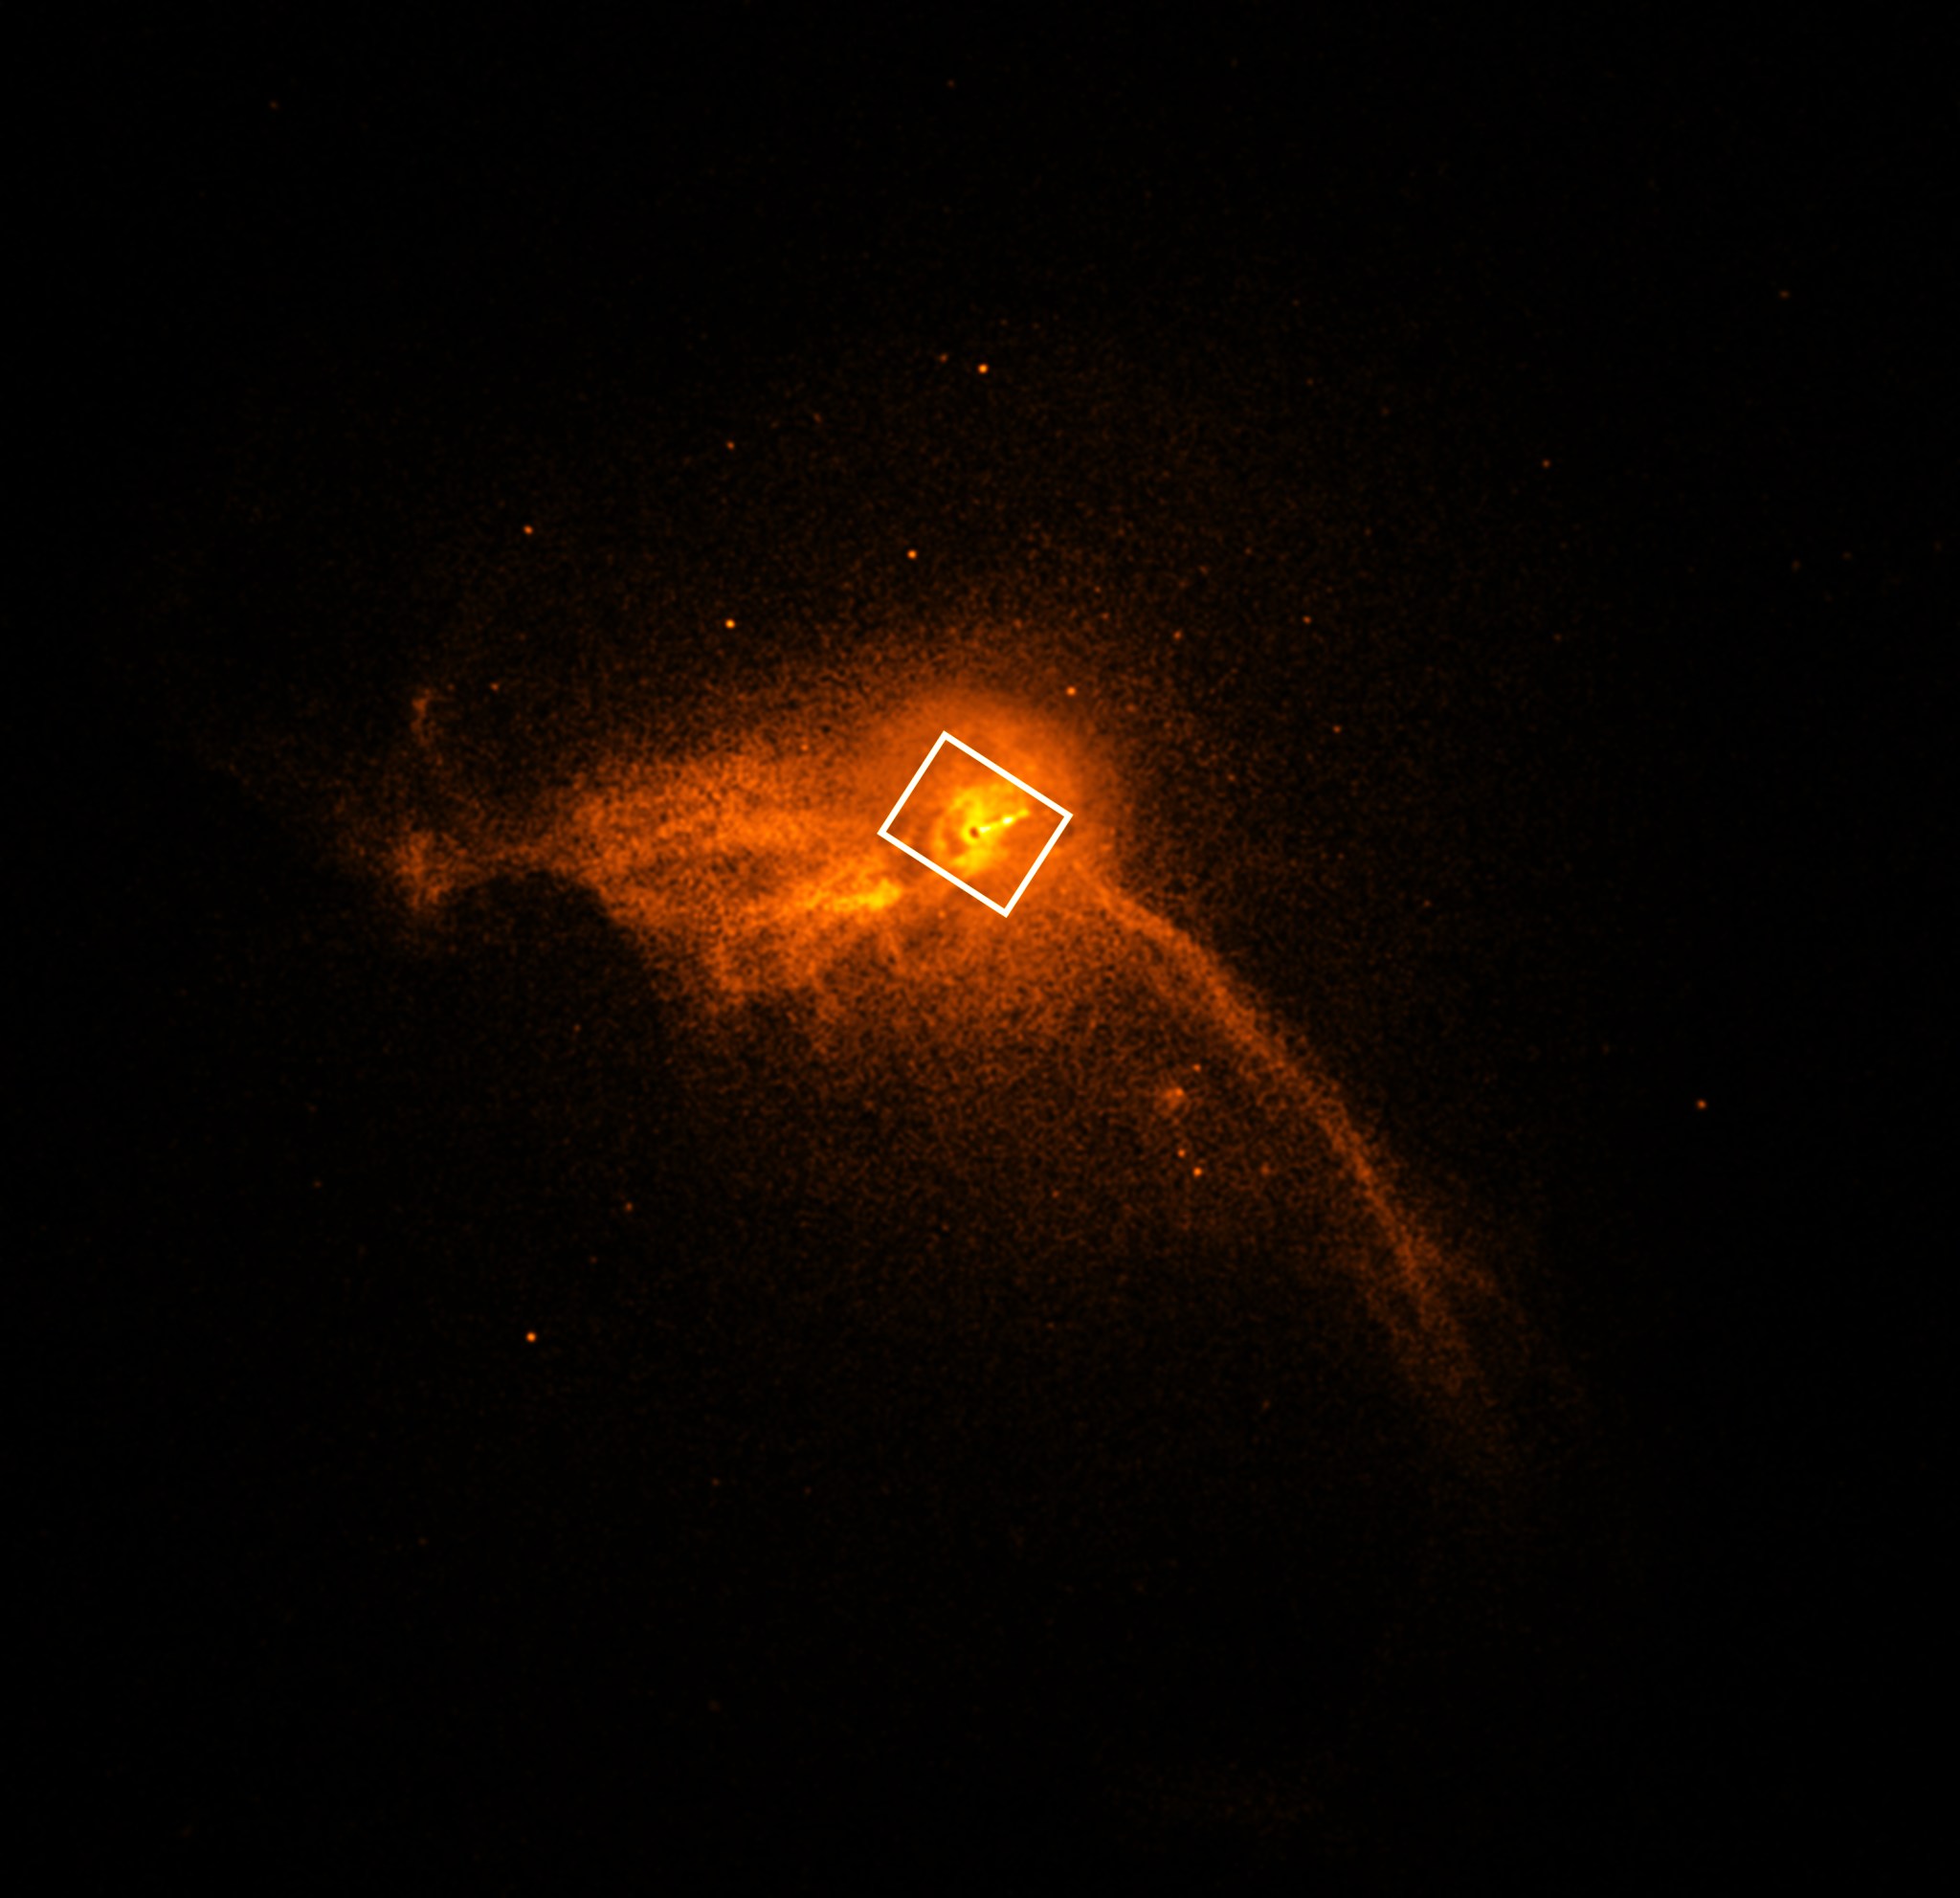 Closeup image of galaxy center